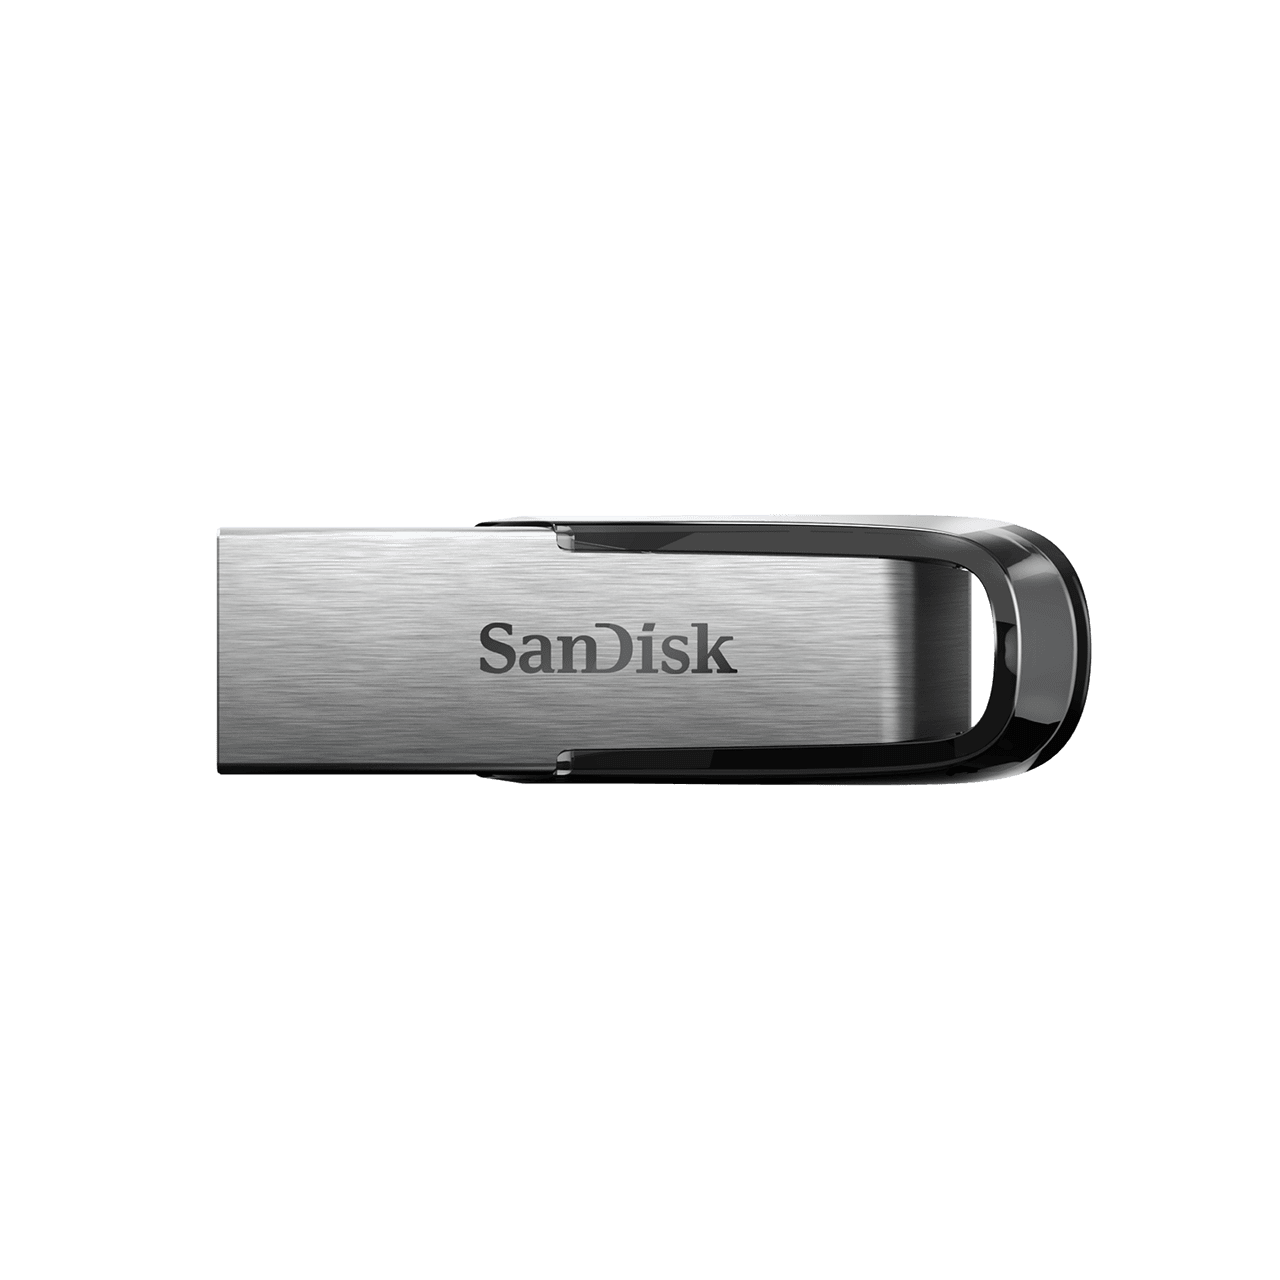 SanDisk 512 GB CZ73 USB 3.0 Metal Mobile Disk Drive | SDCZ73-512G-G46